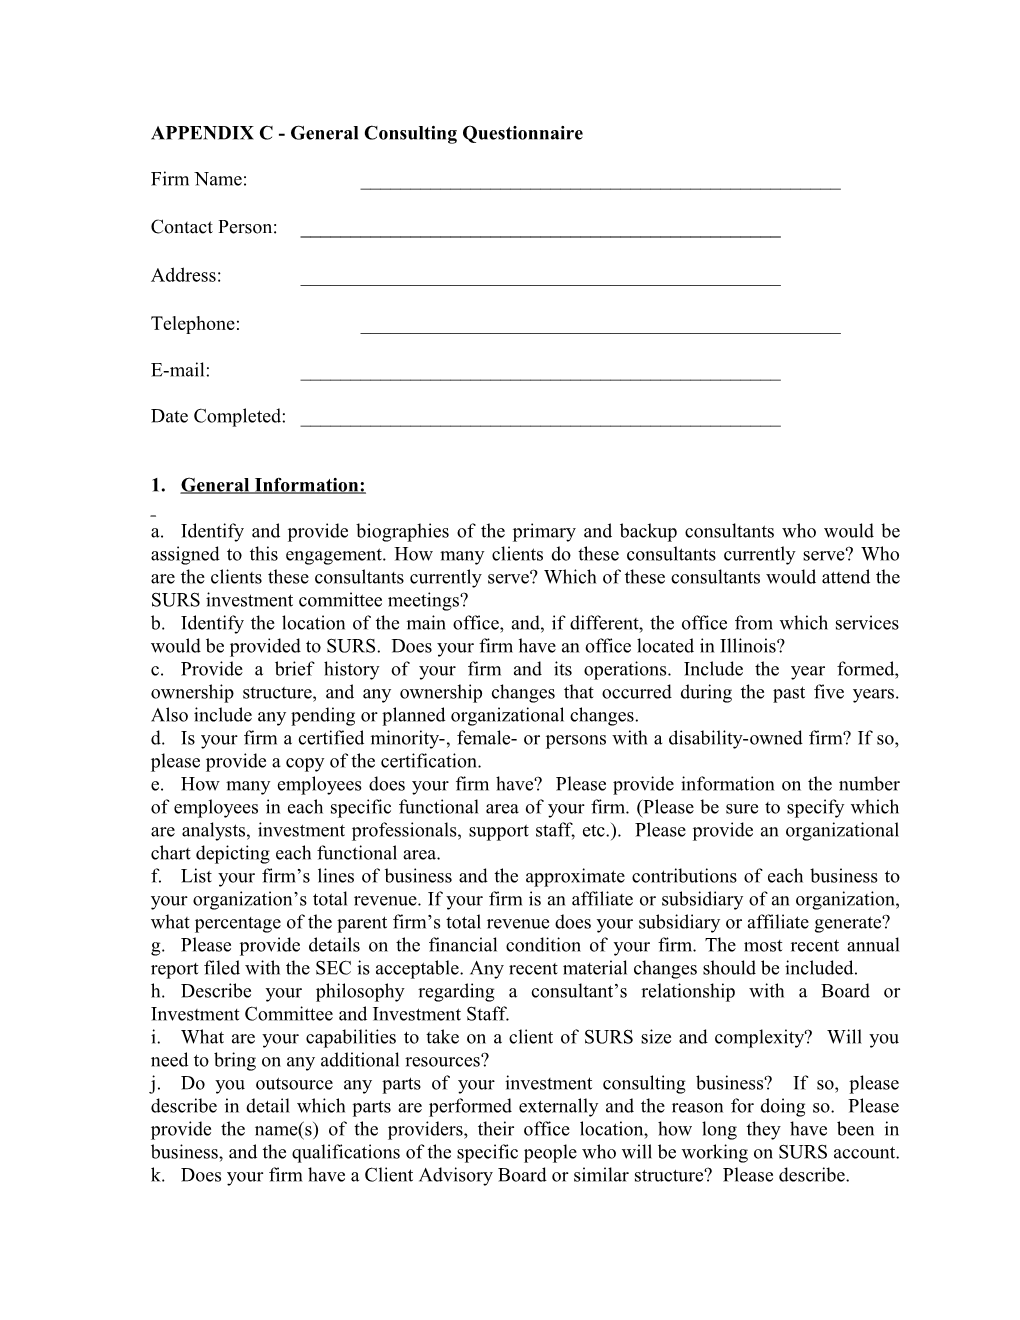 APPENDIX C - General Consulting Questionnaire